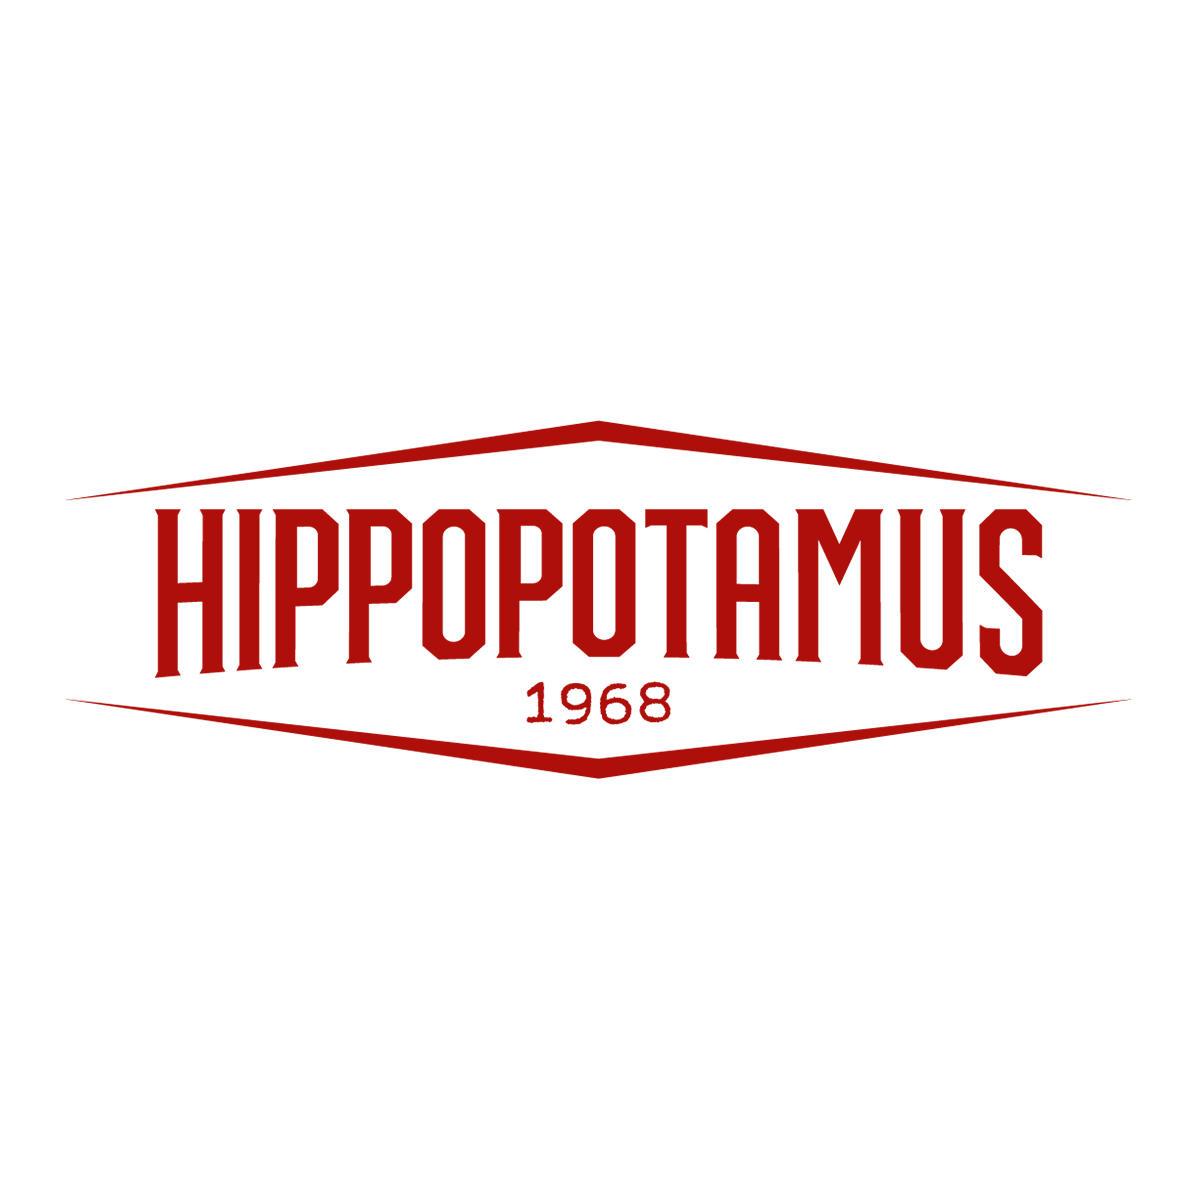 Hippopotamus Steakhouse Val De Reuil